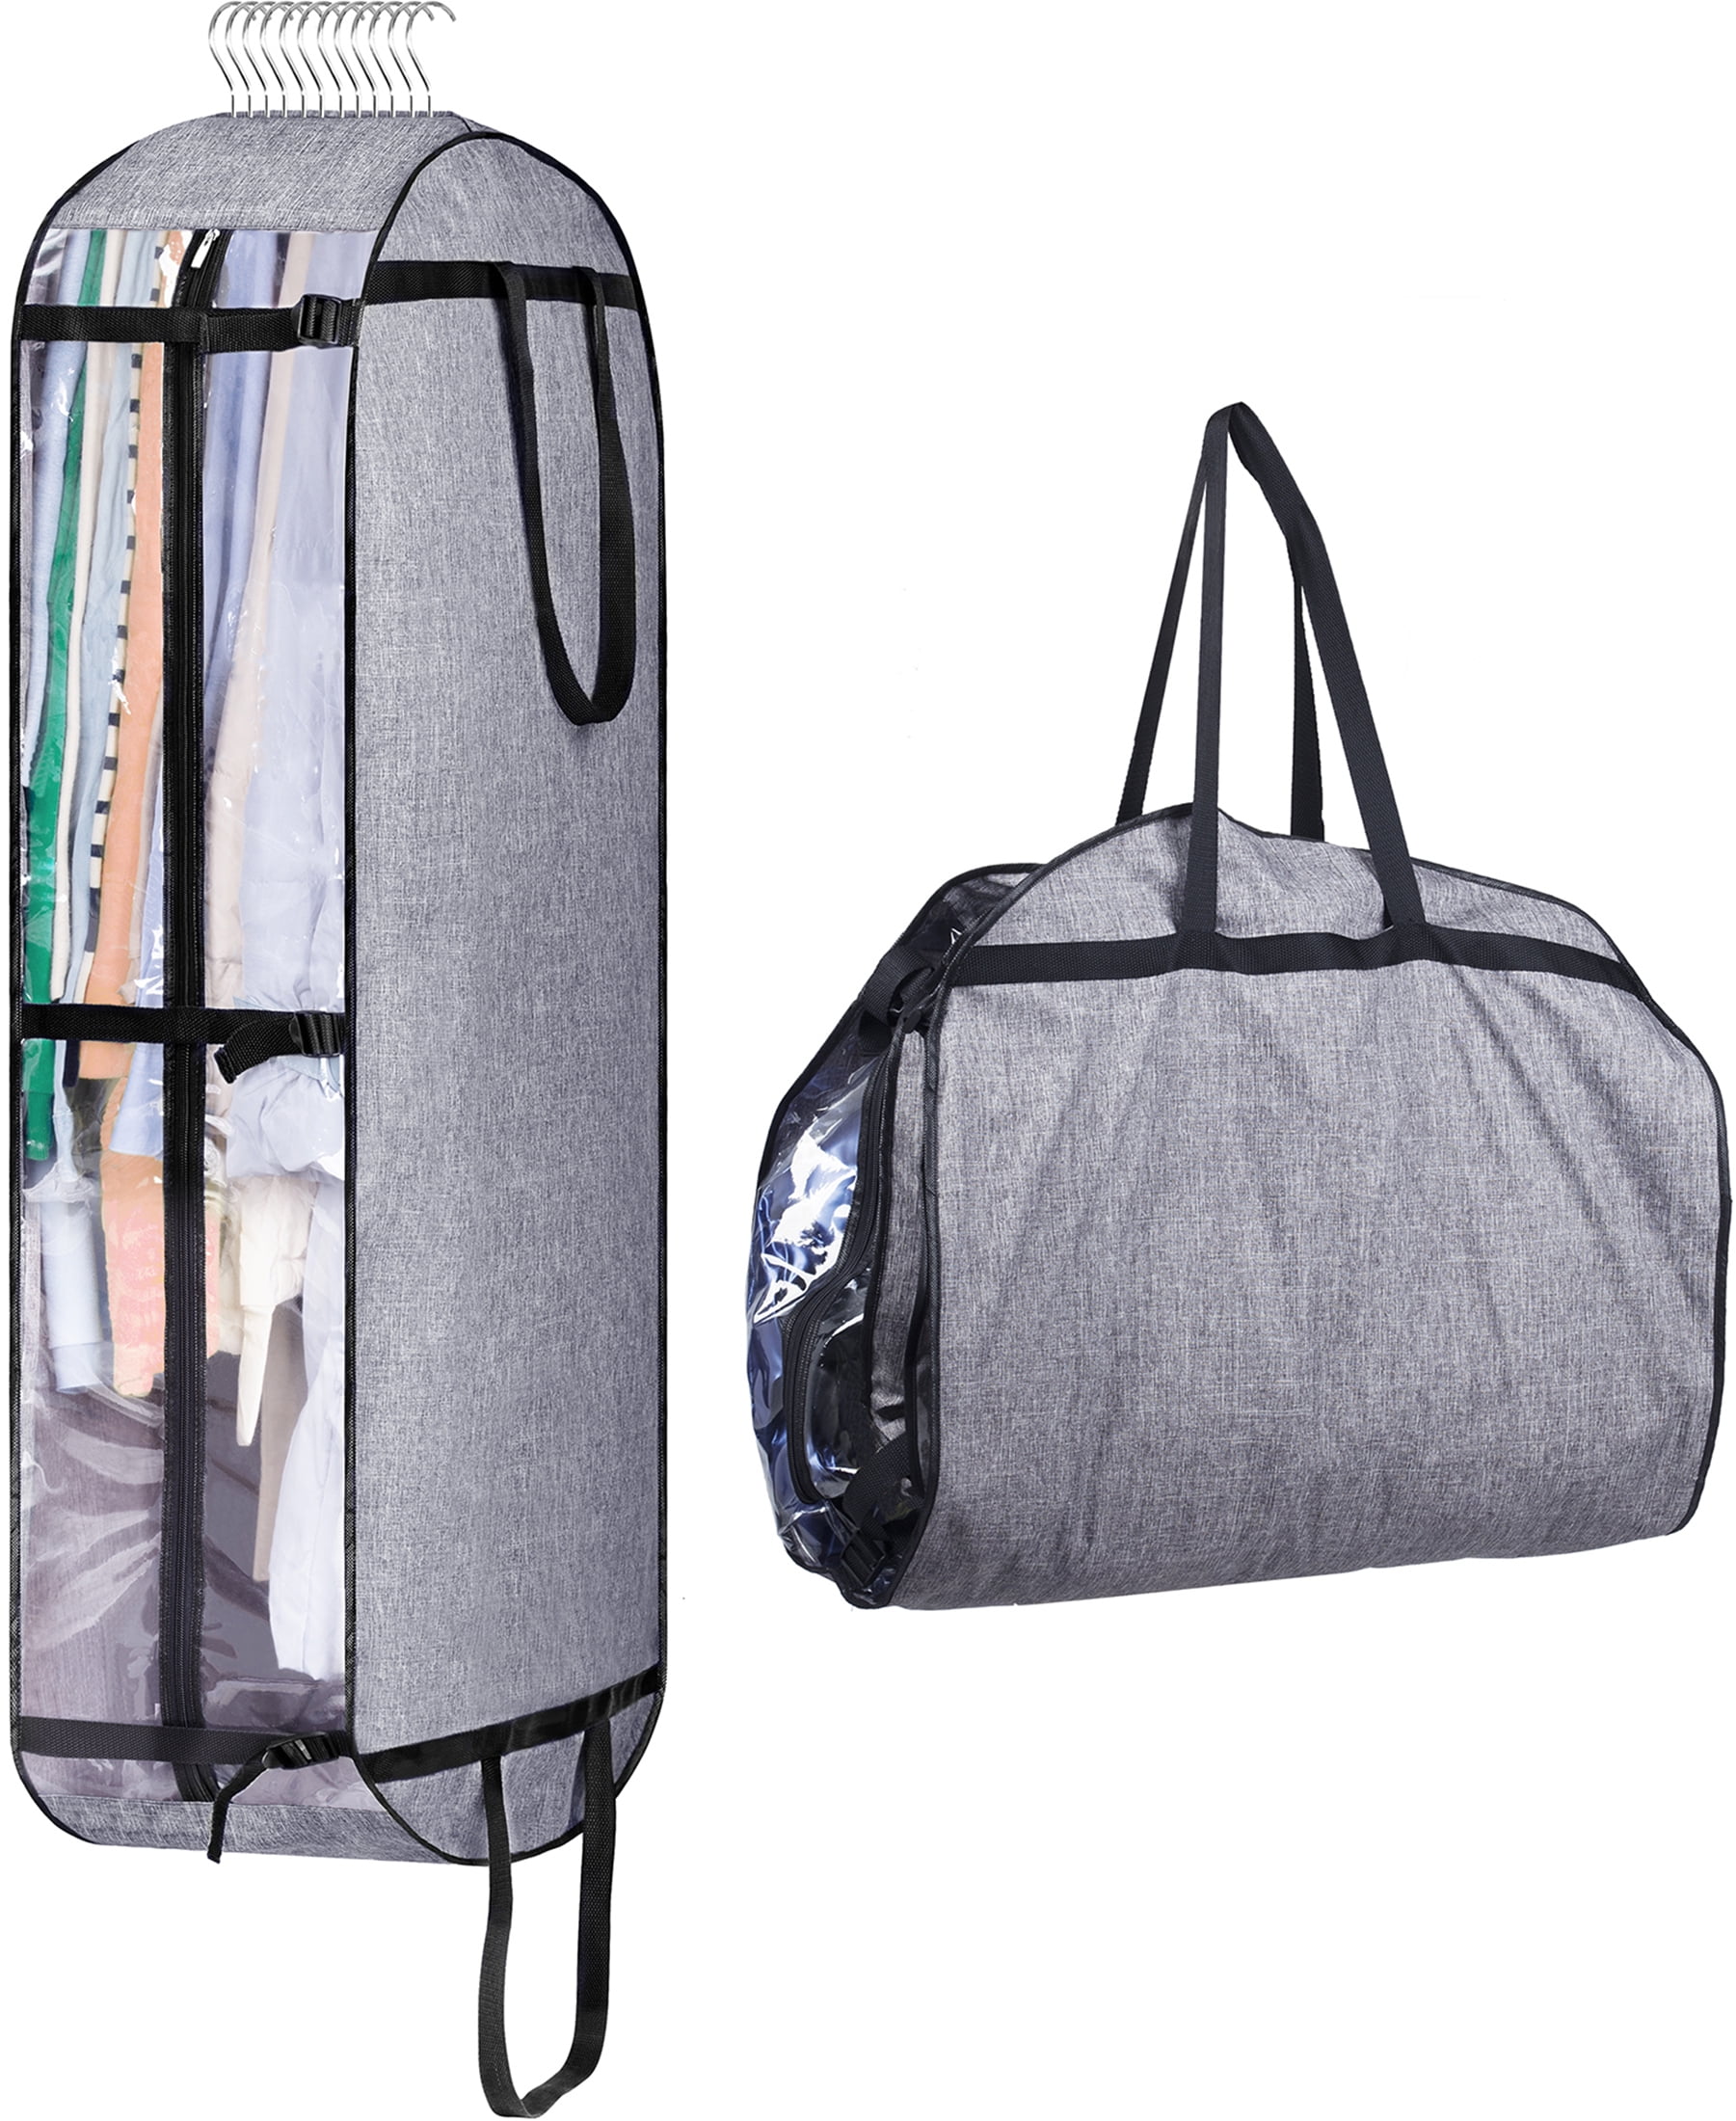 140cm-60cm Suit Cover Bag Garment Travel Dress Cover Bag 